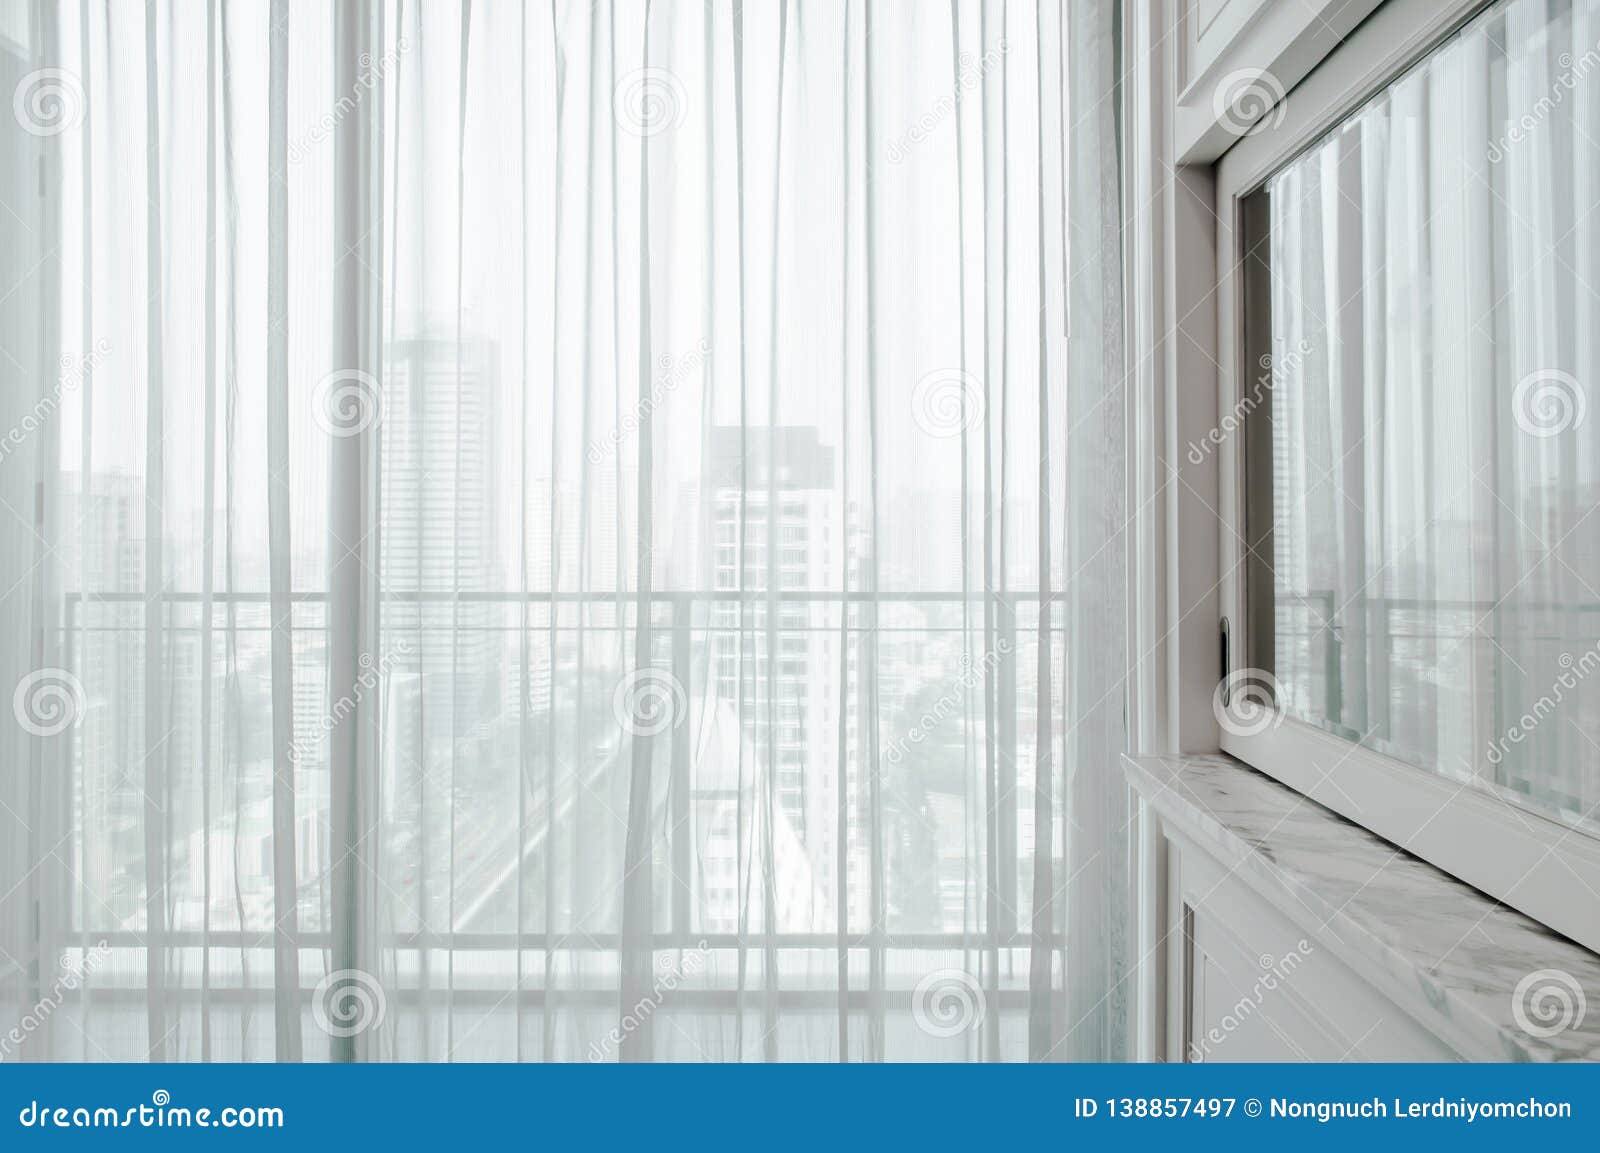 White Curtain Sunlight through the Windows in the City. Design Linen ...